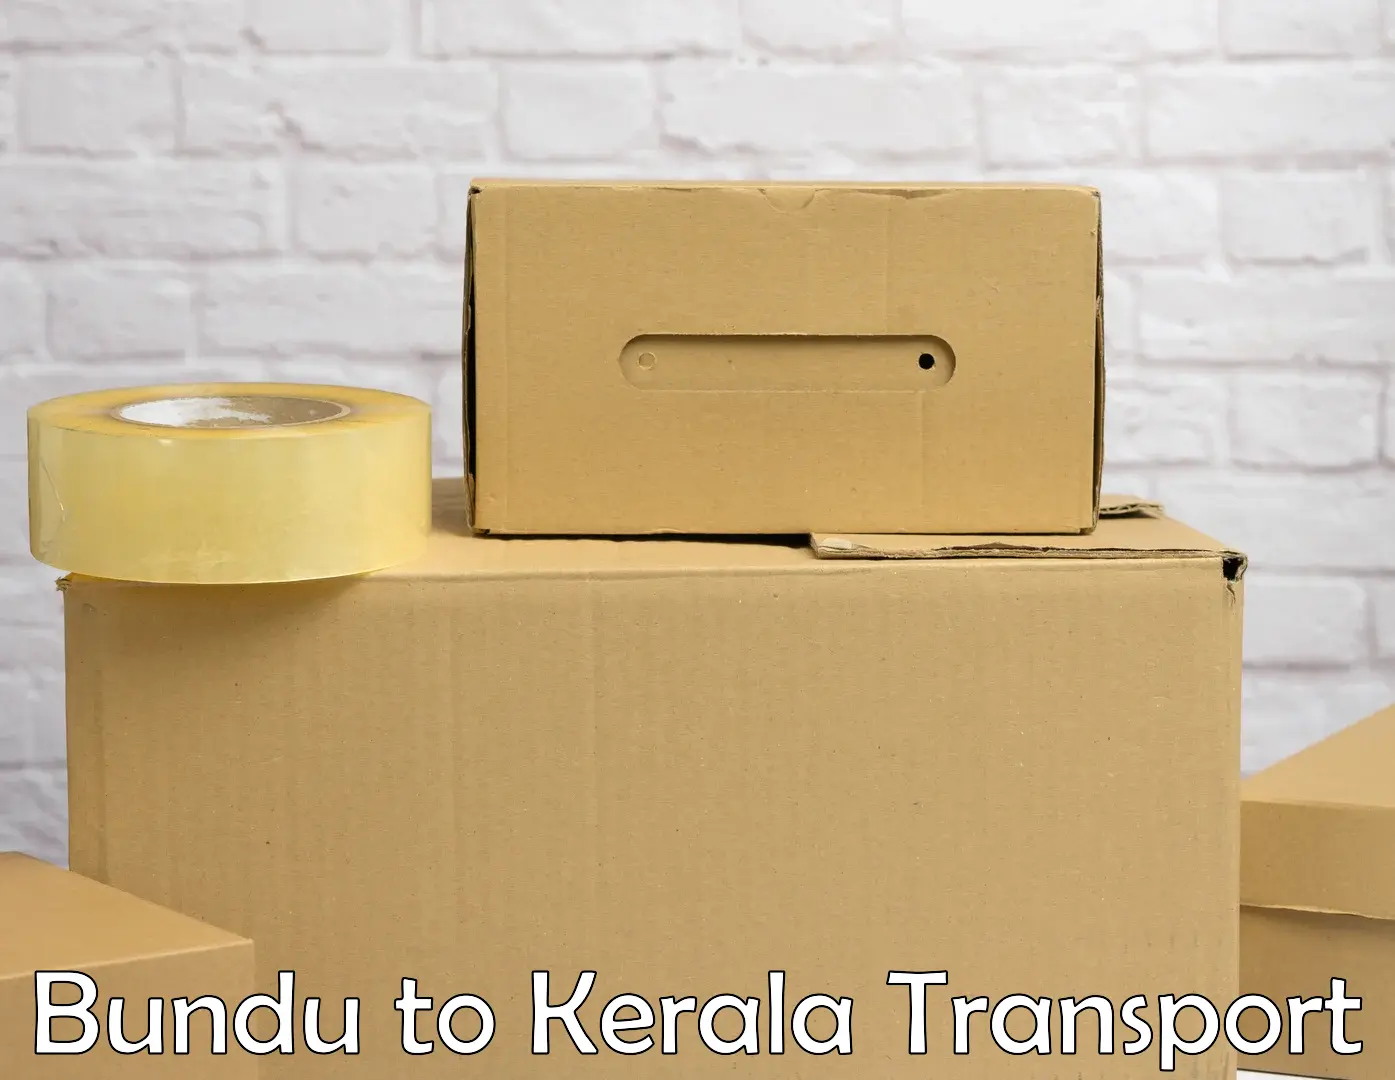 Road transport online services Bundu to Kerala